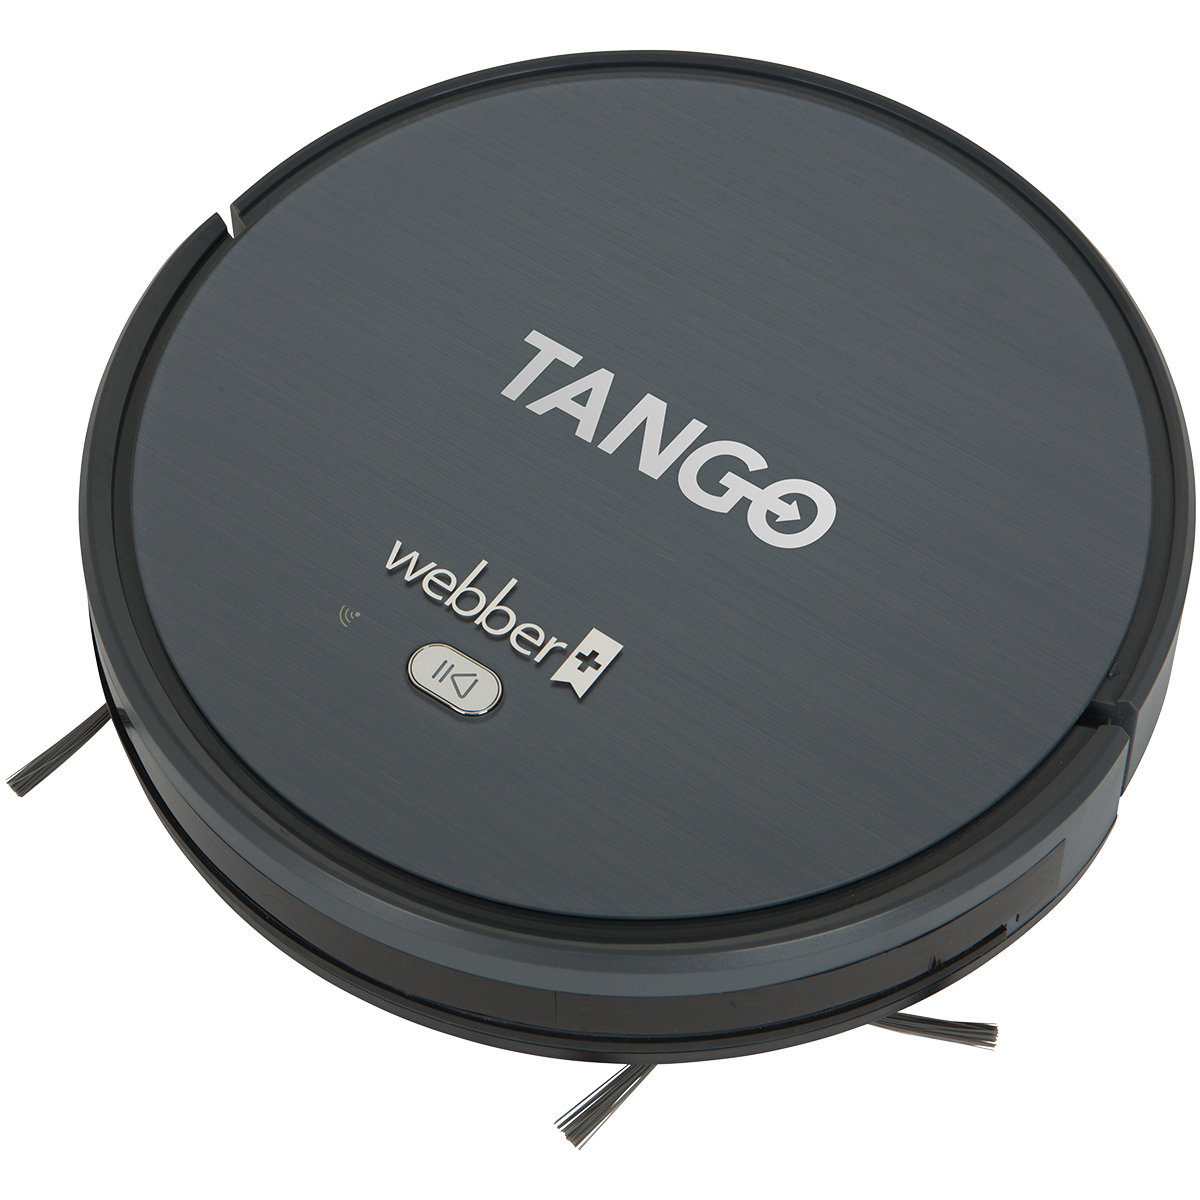 Webber Tango RSX500